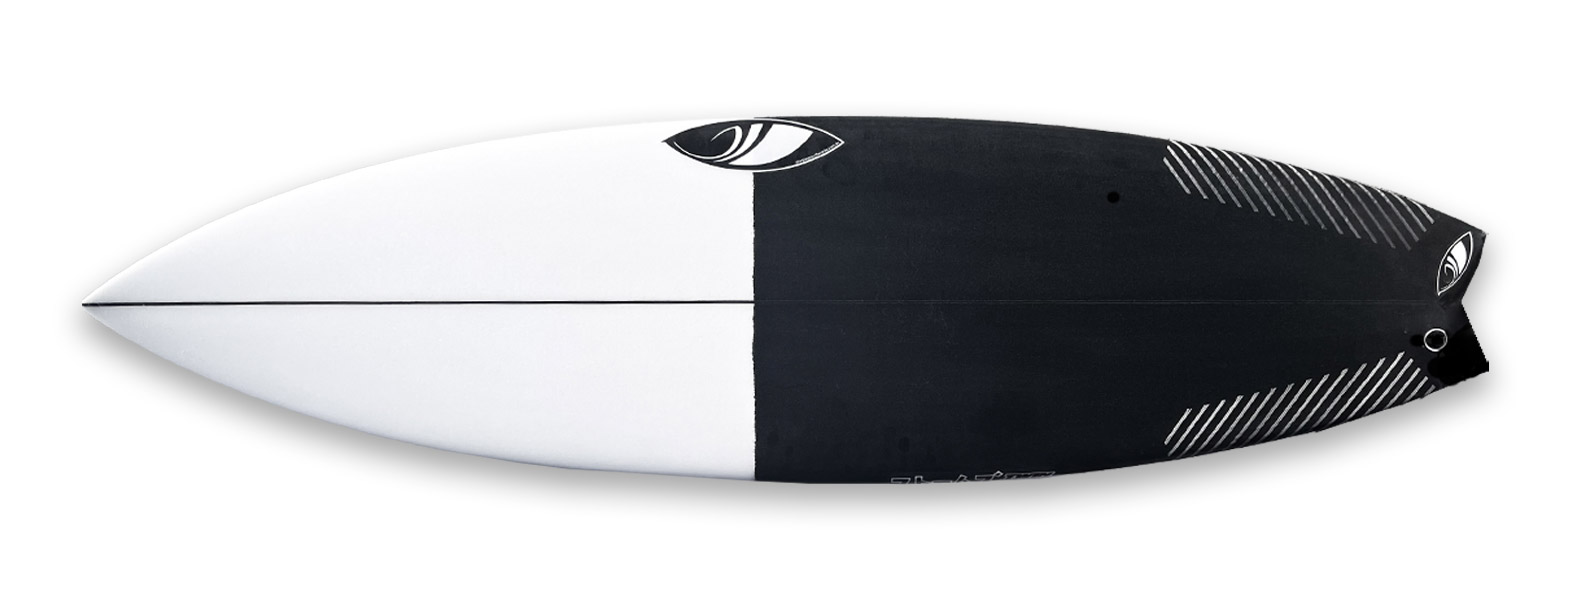 Sharpeye Surfboards Twin turbo Black Tail Dip